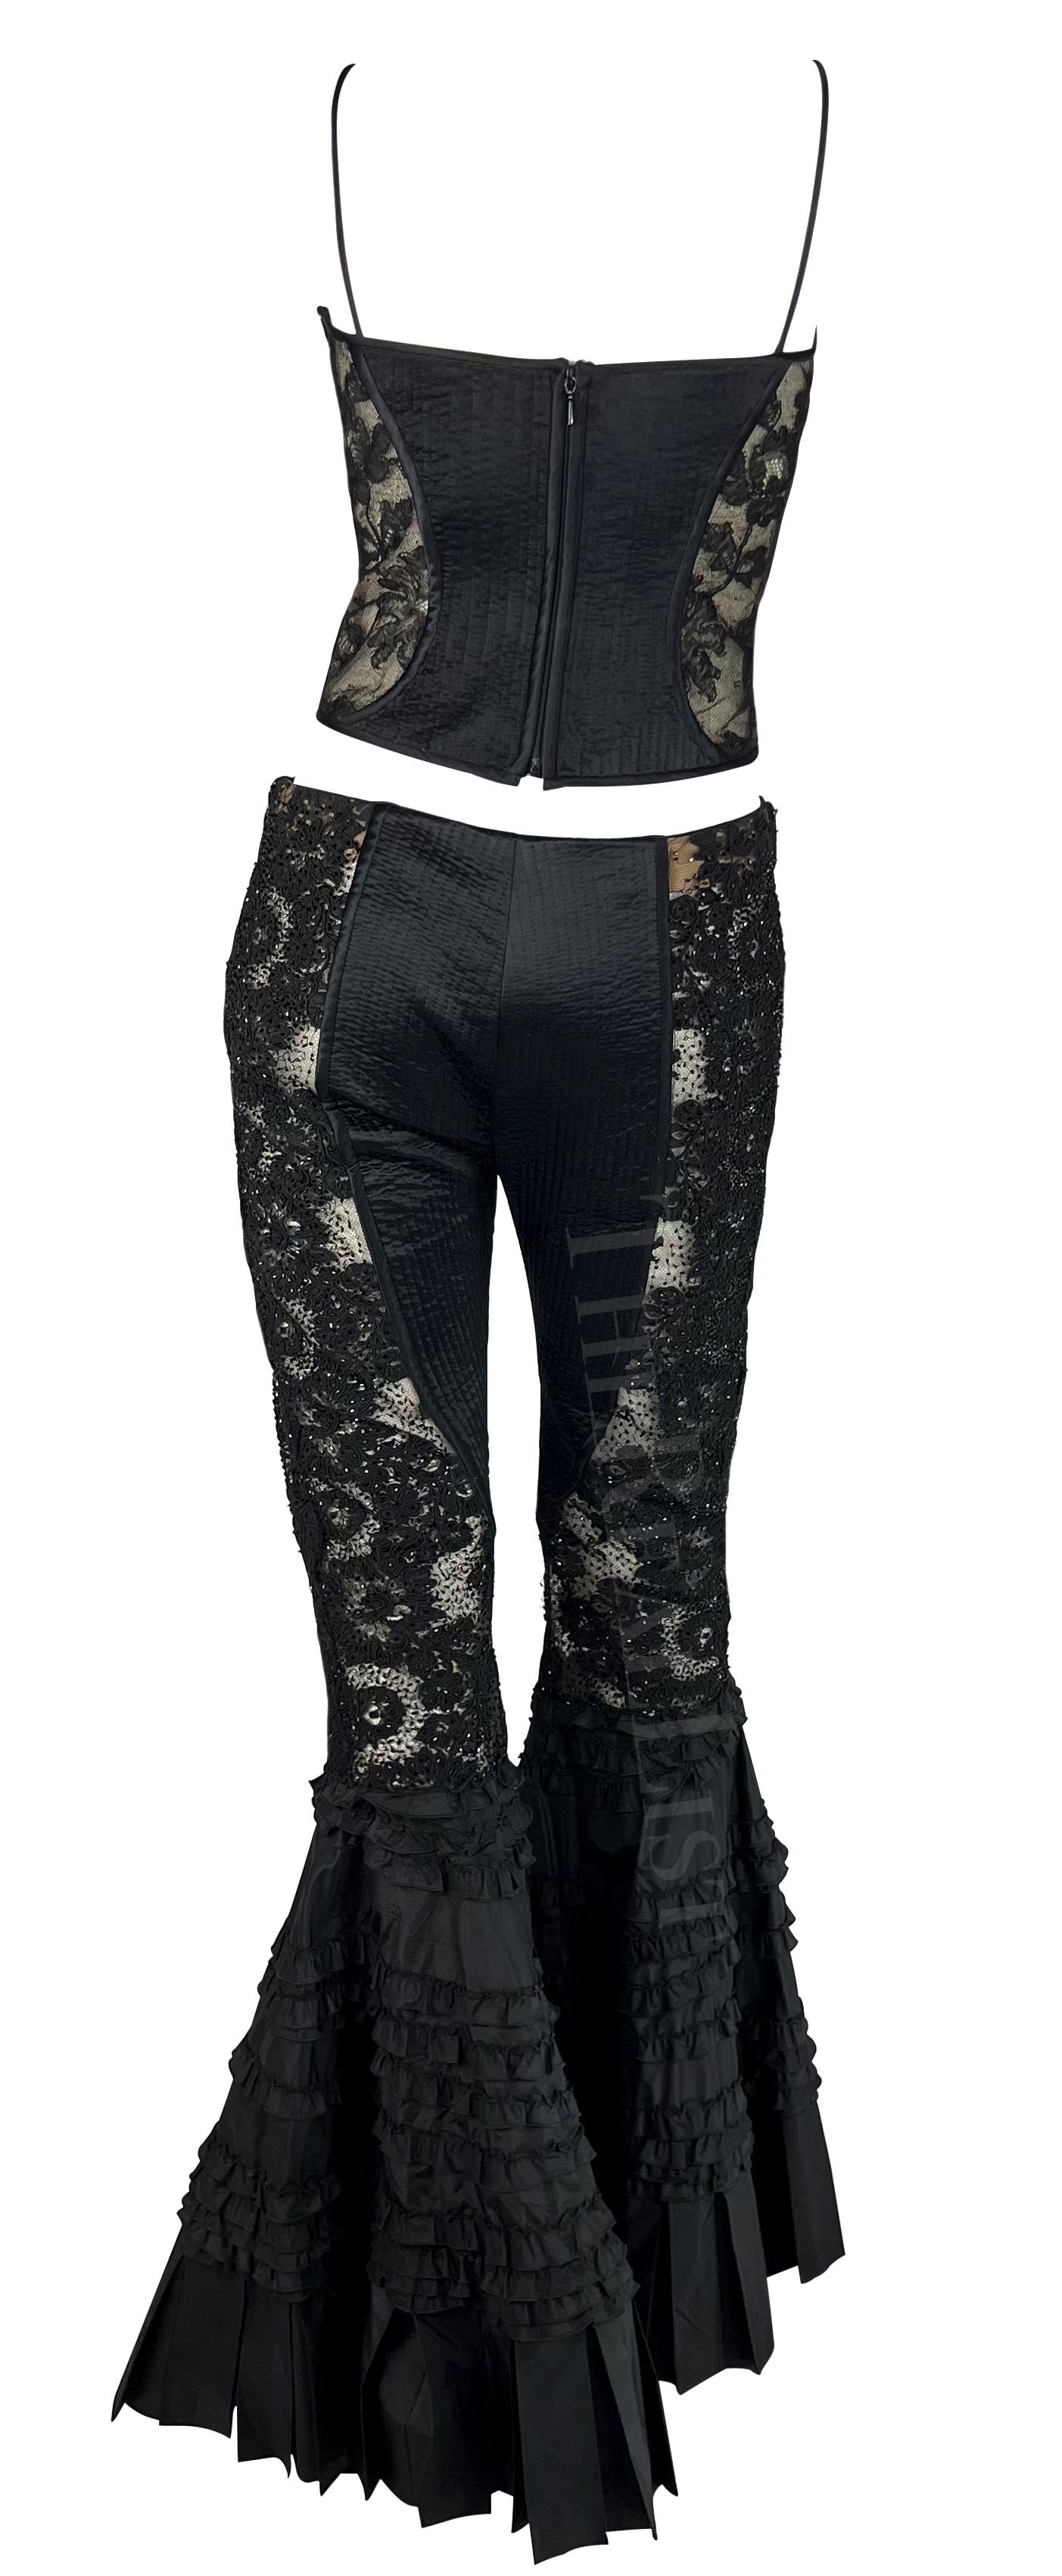 S/S 2002 Valentino Garavani Sheer Black Beaded Lace Flare Pants Crop Top Set For Sale 5